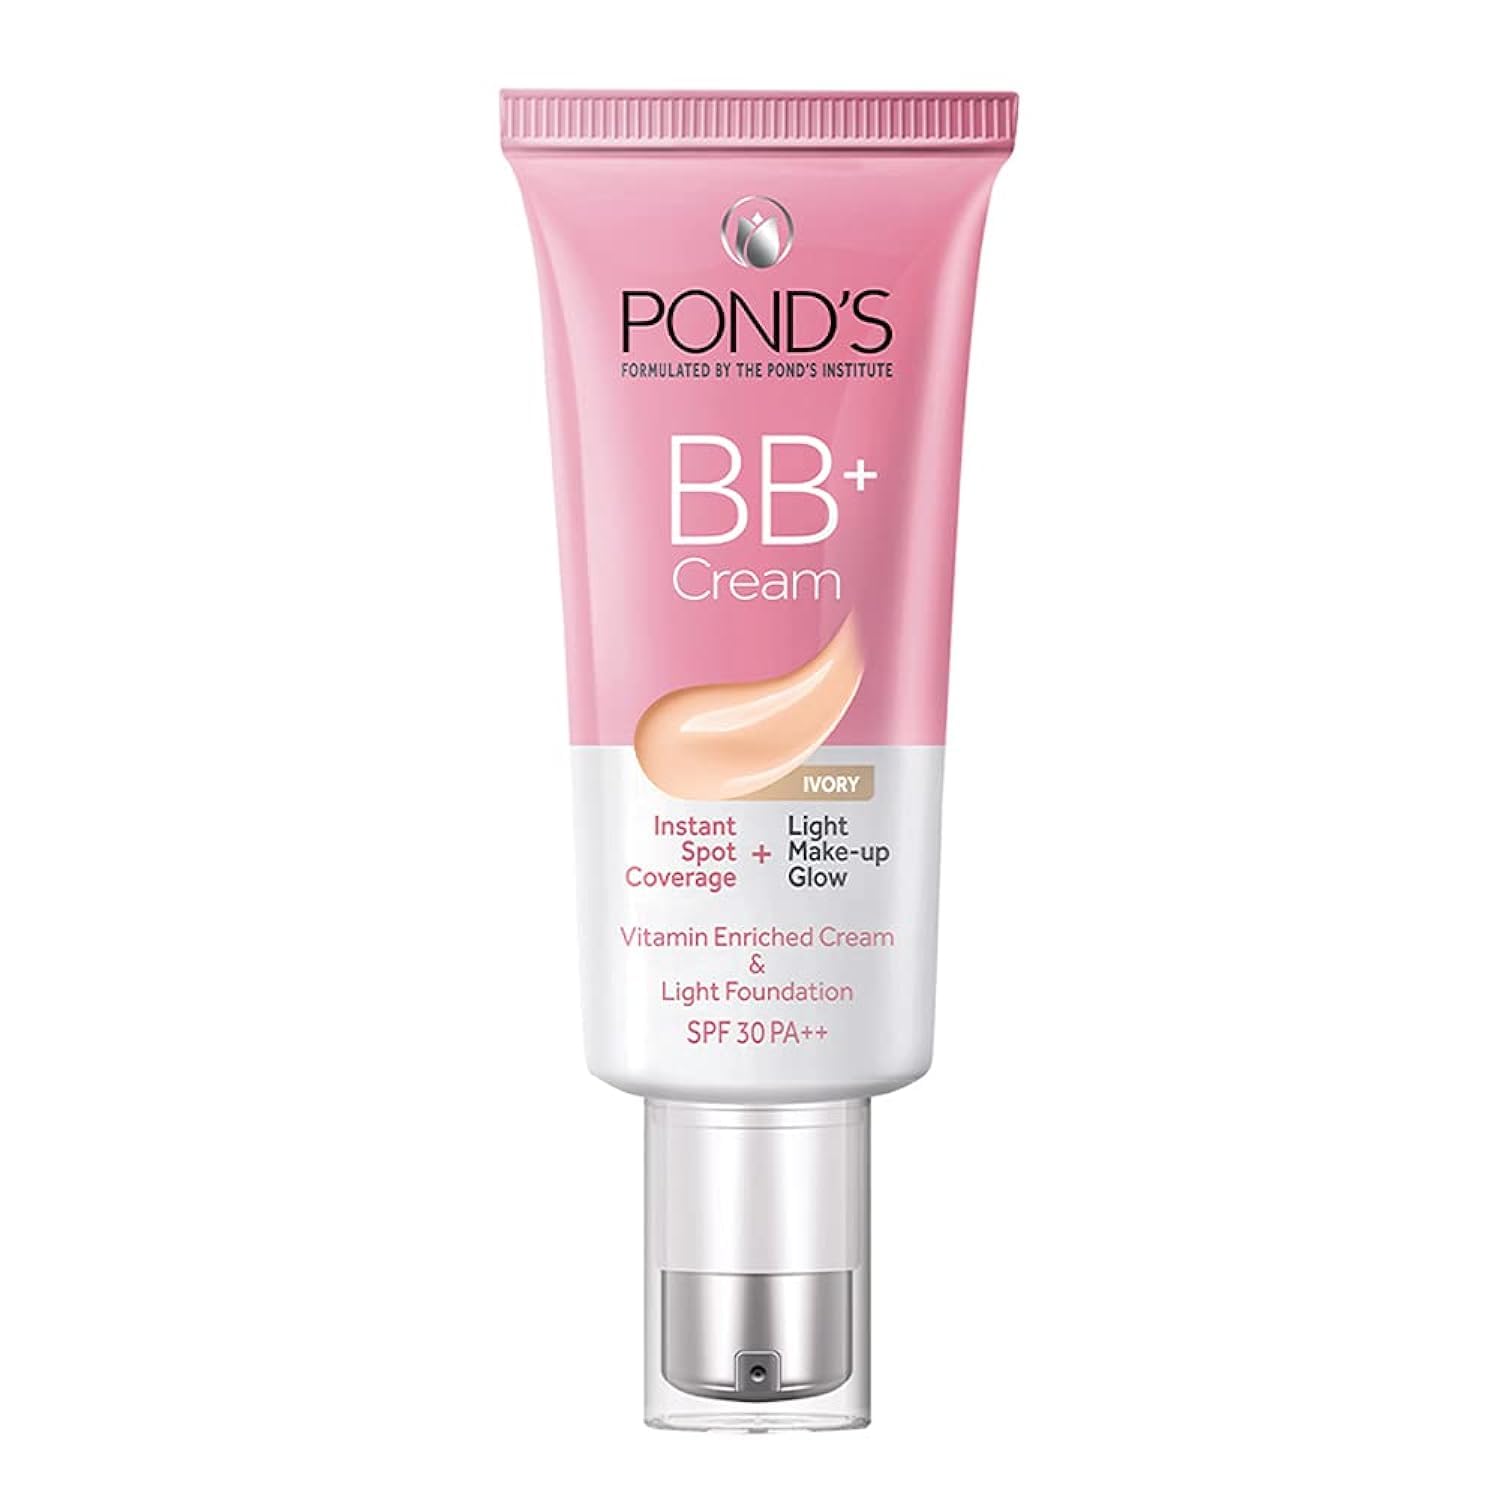 Ponds Instant Coverage & Glow BB+ Ivory Cream